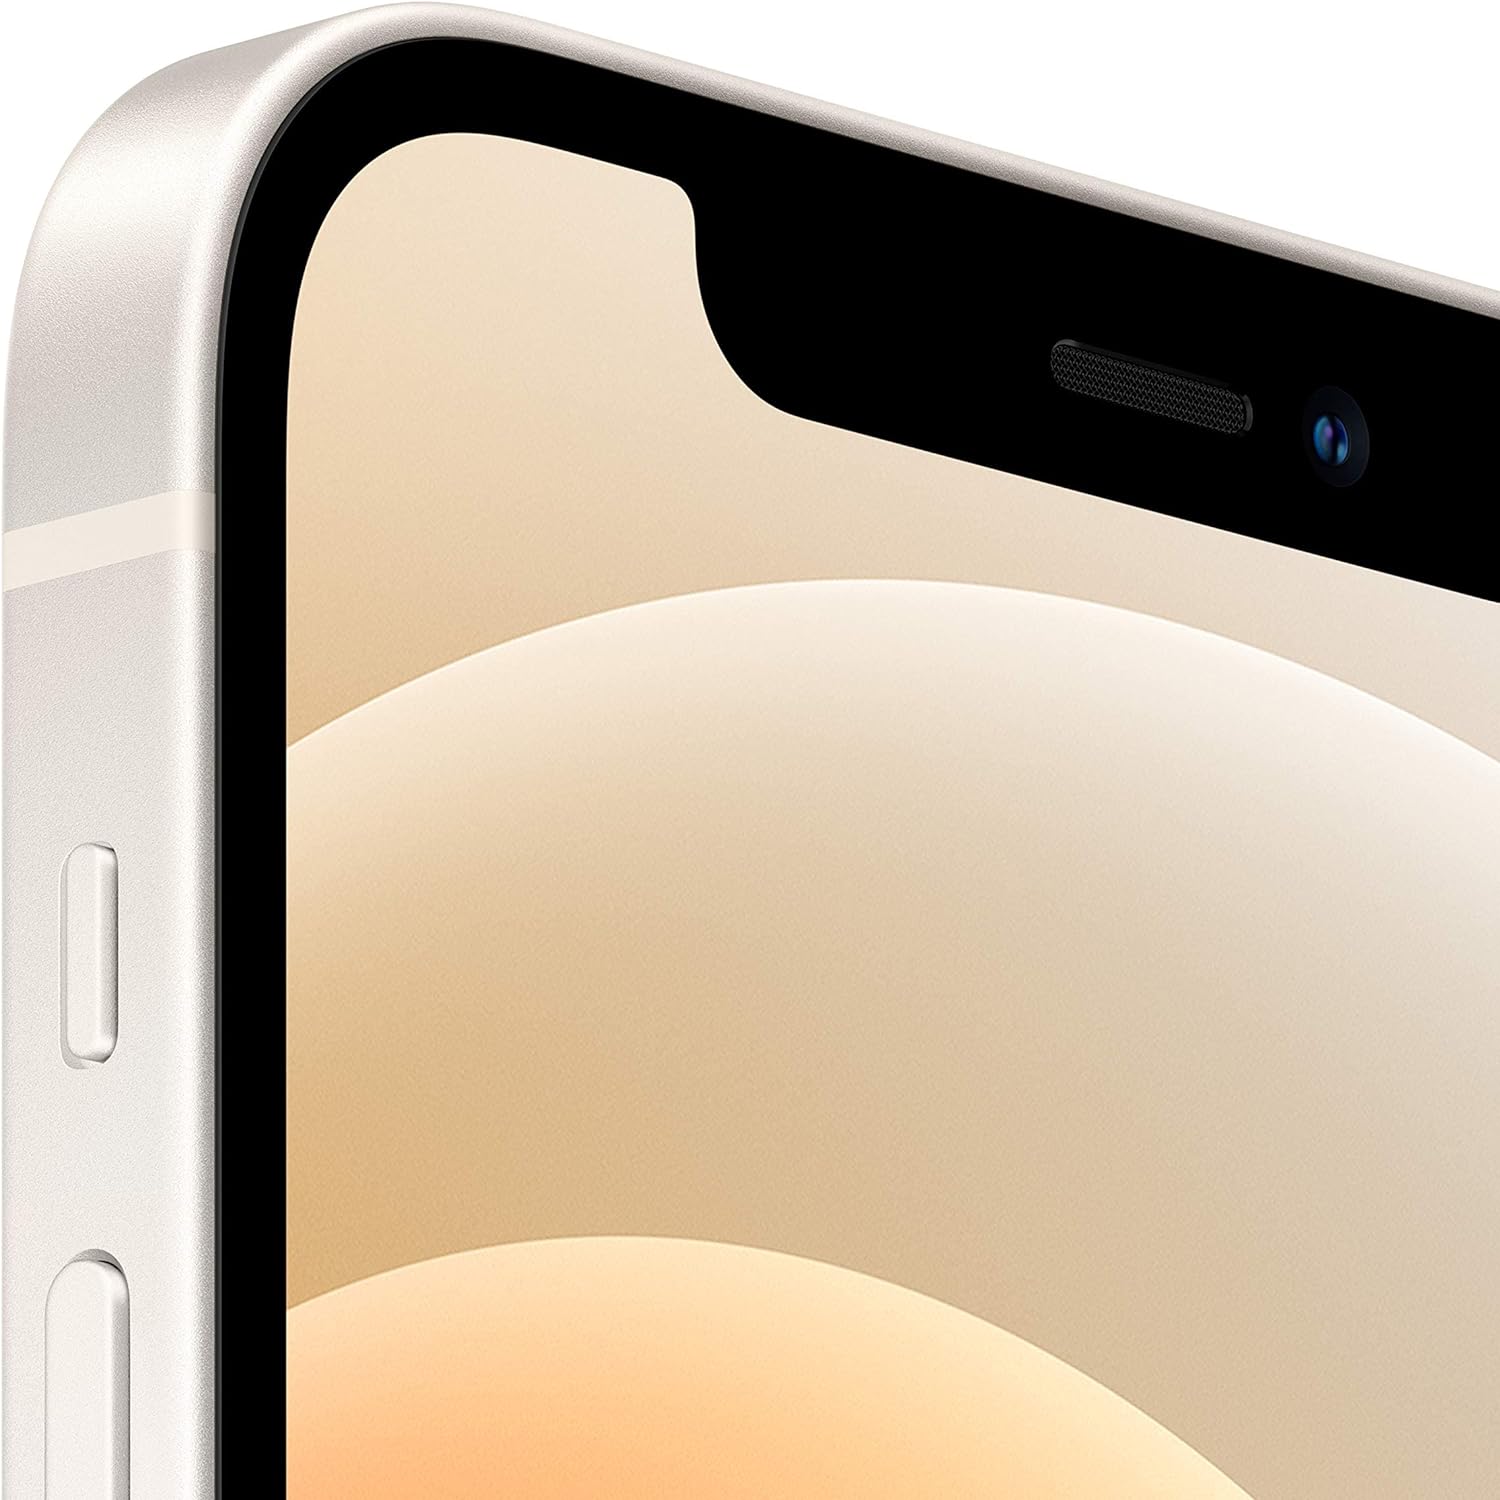 Apple iPhone 12 (64GB) - White